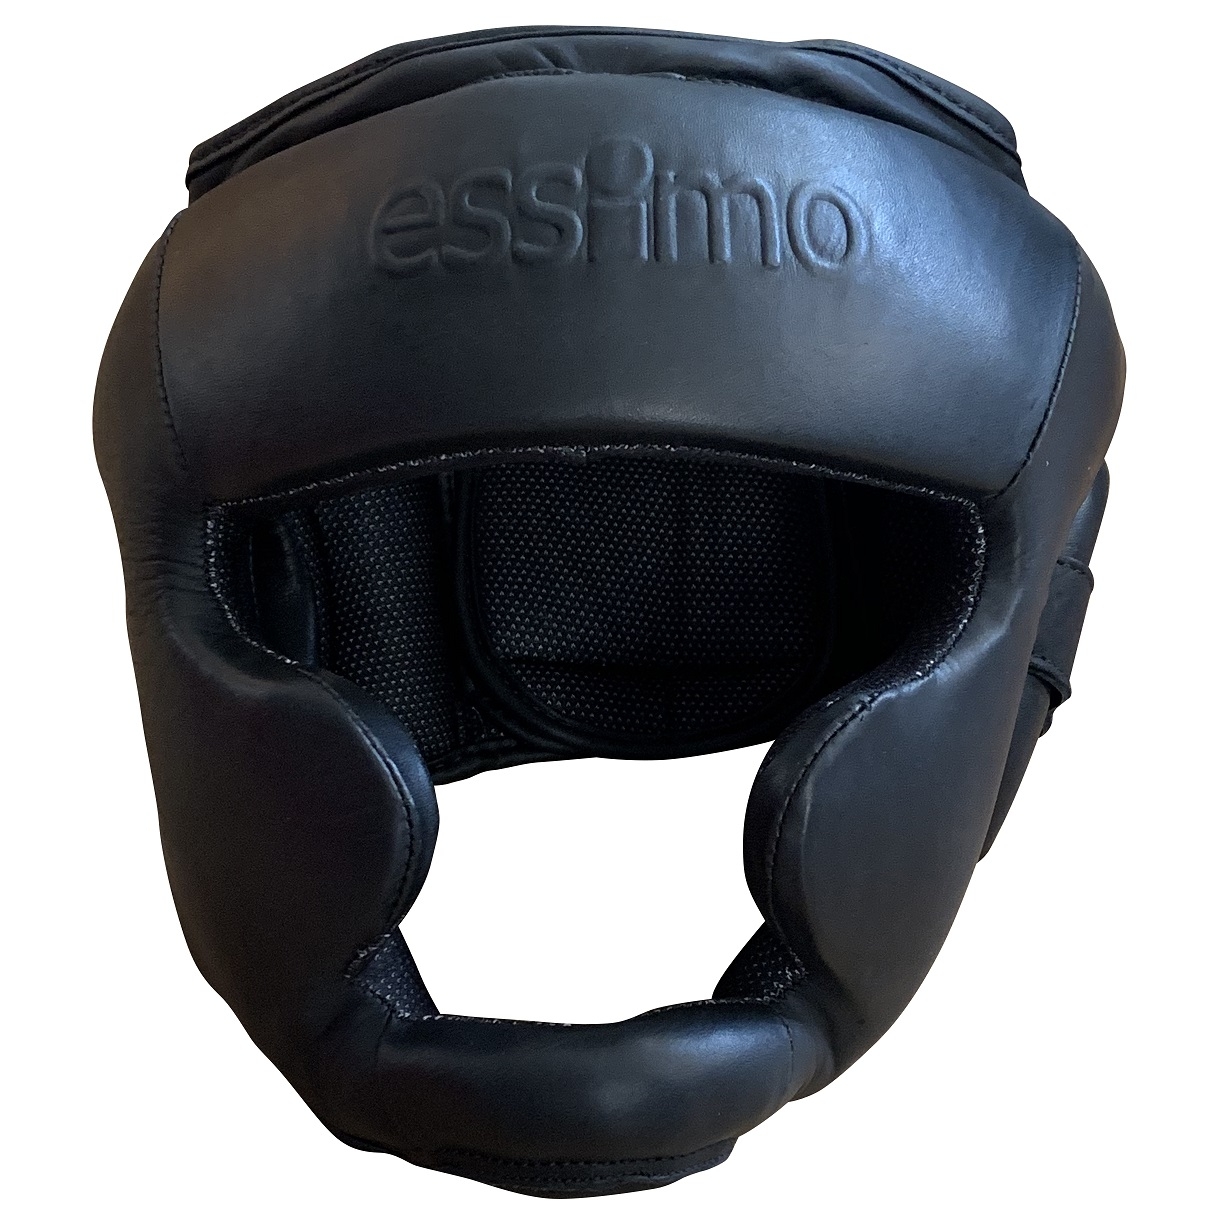 Essimo Headguard Leather With Chin - Black/Black